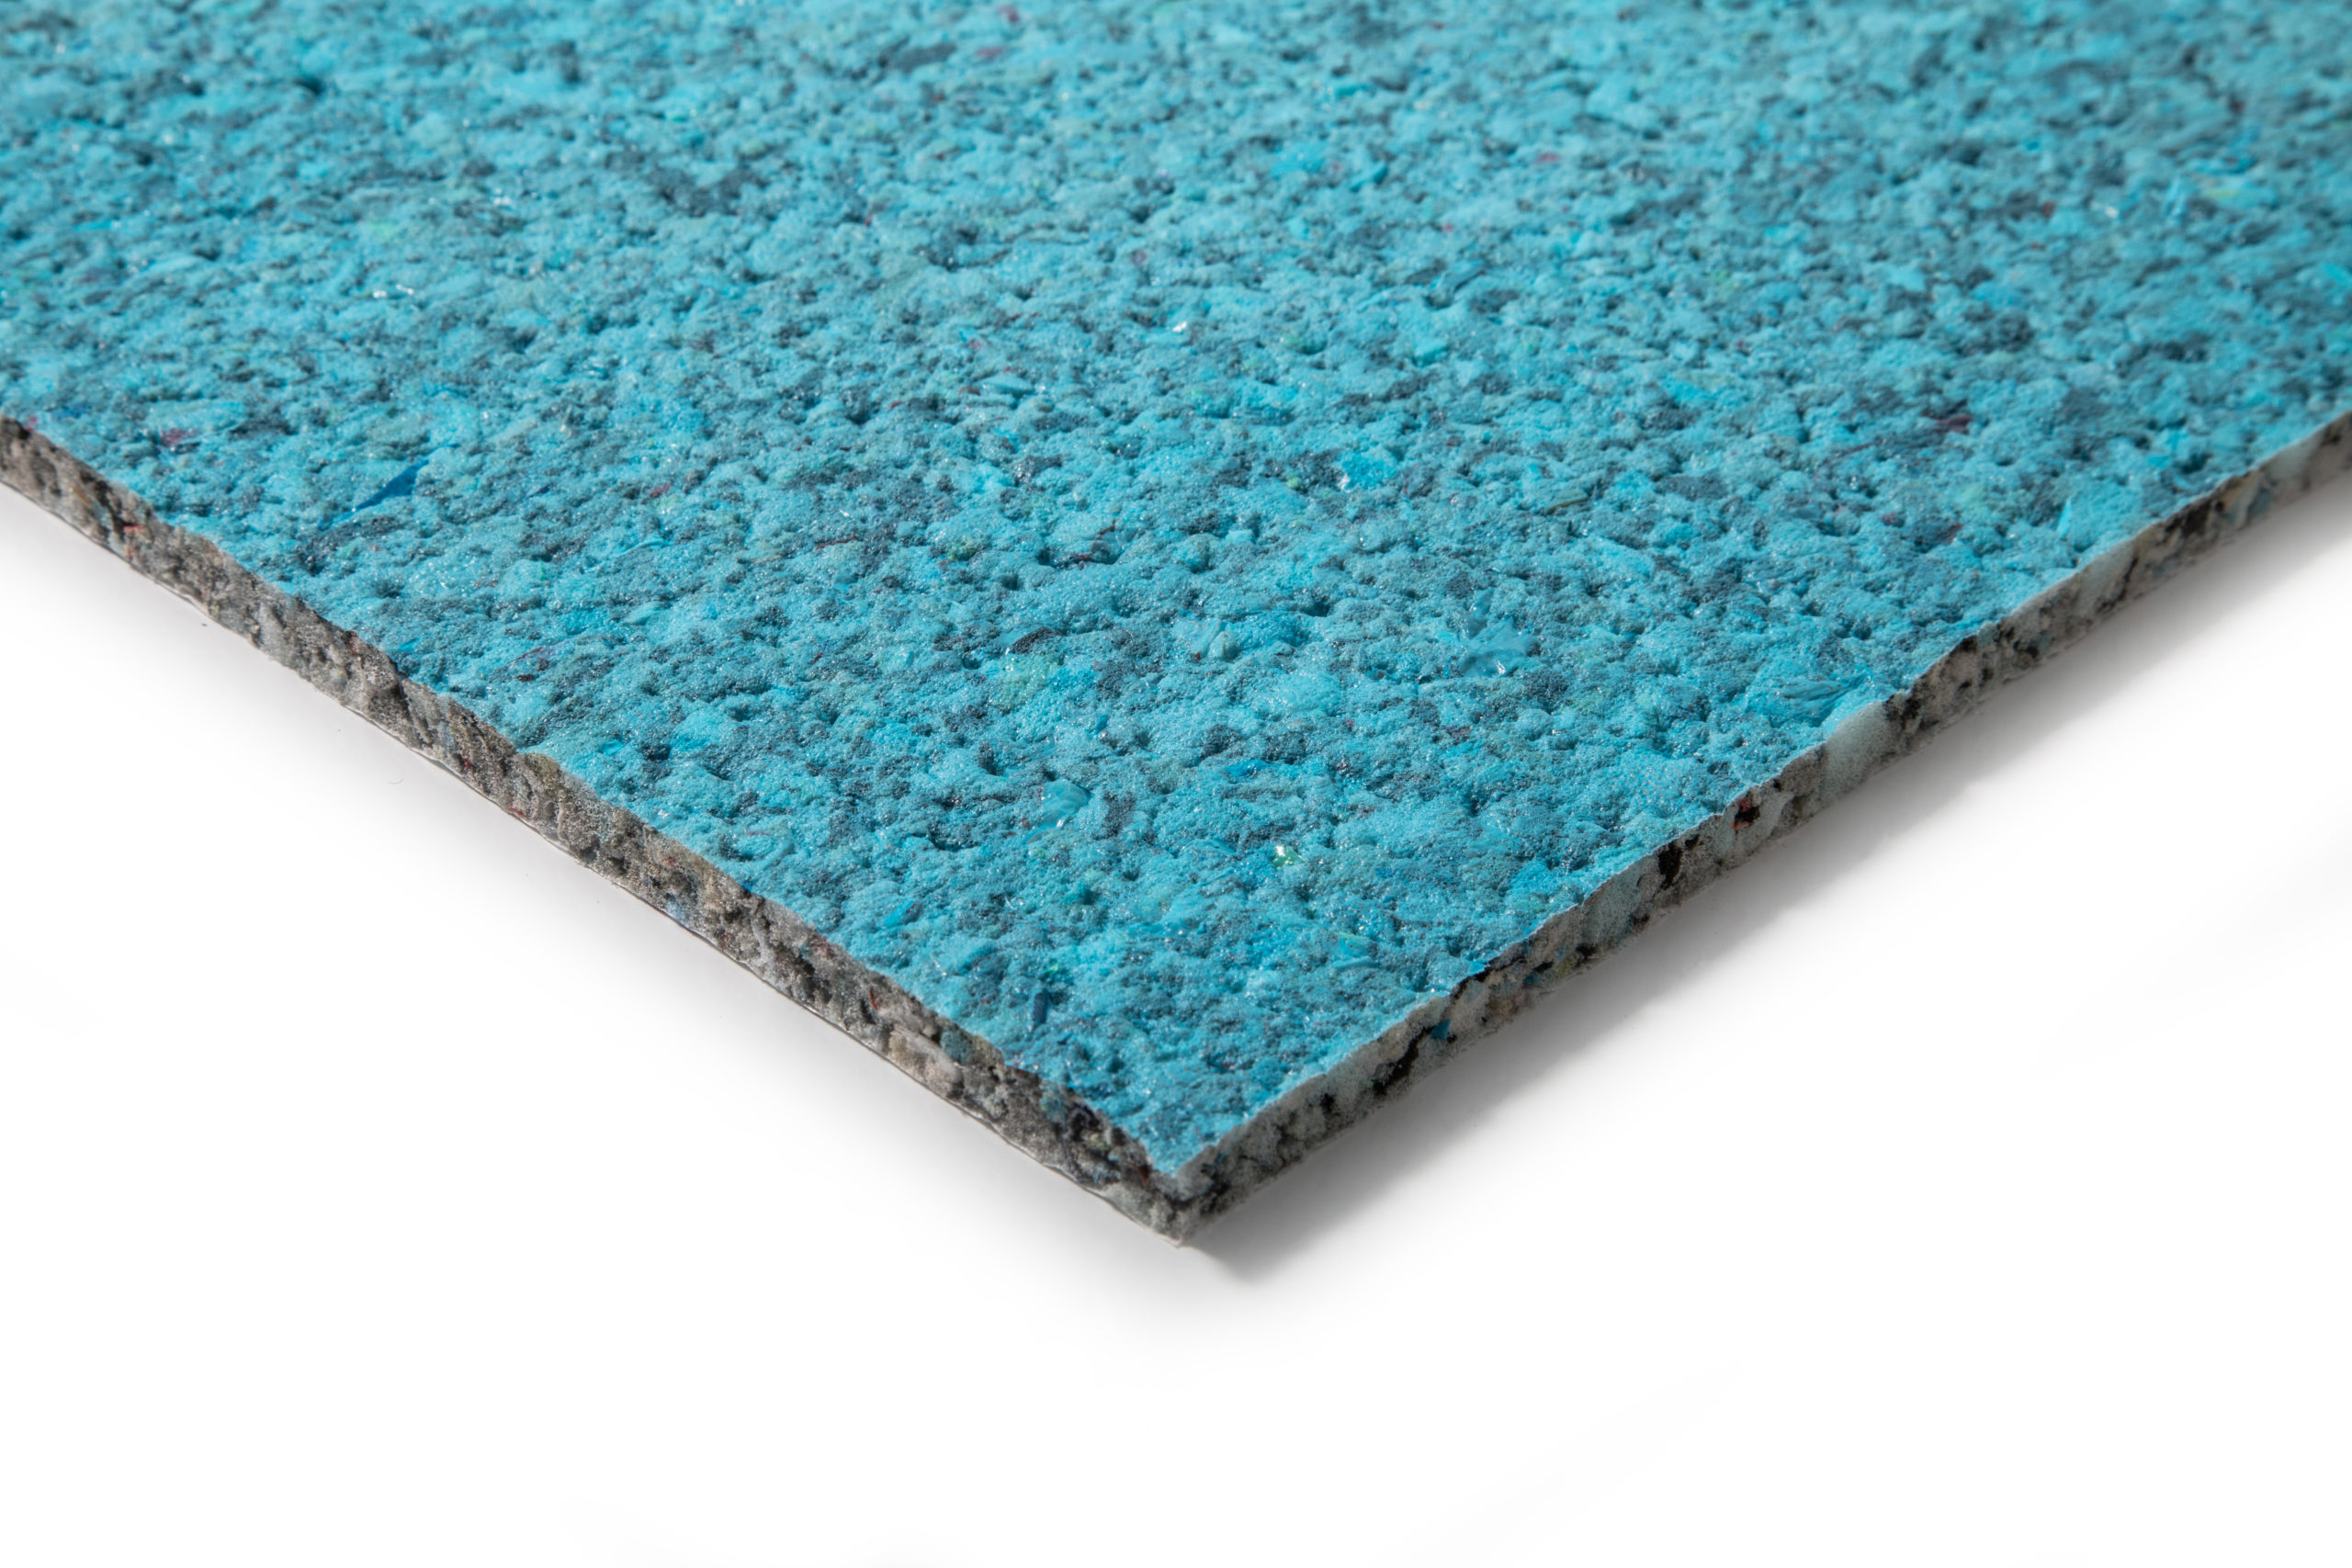 12mm Thick Carpet Underlay, PU Foam, Buy Cheap 12mm Thick Carpet Underlay  Online